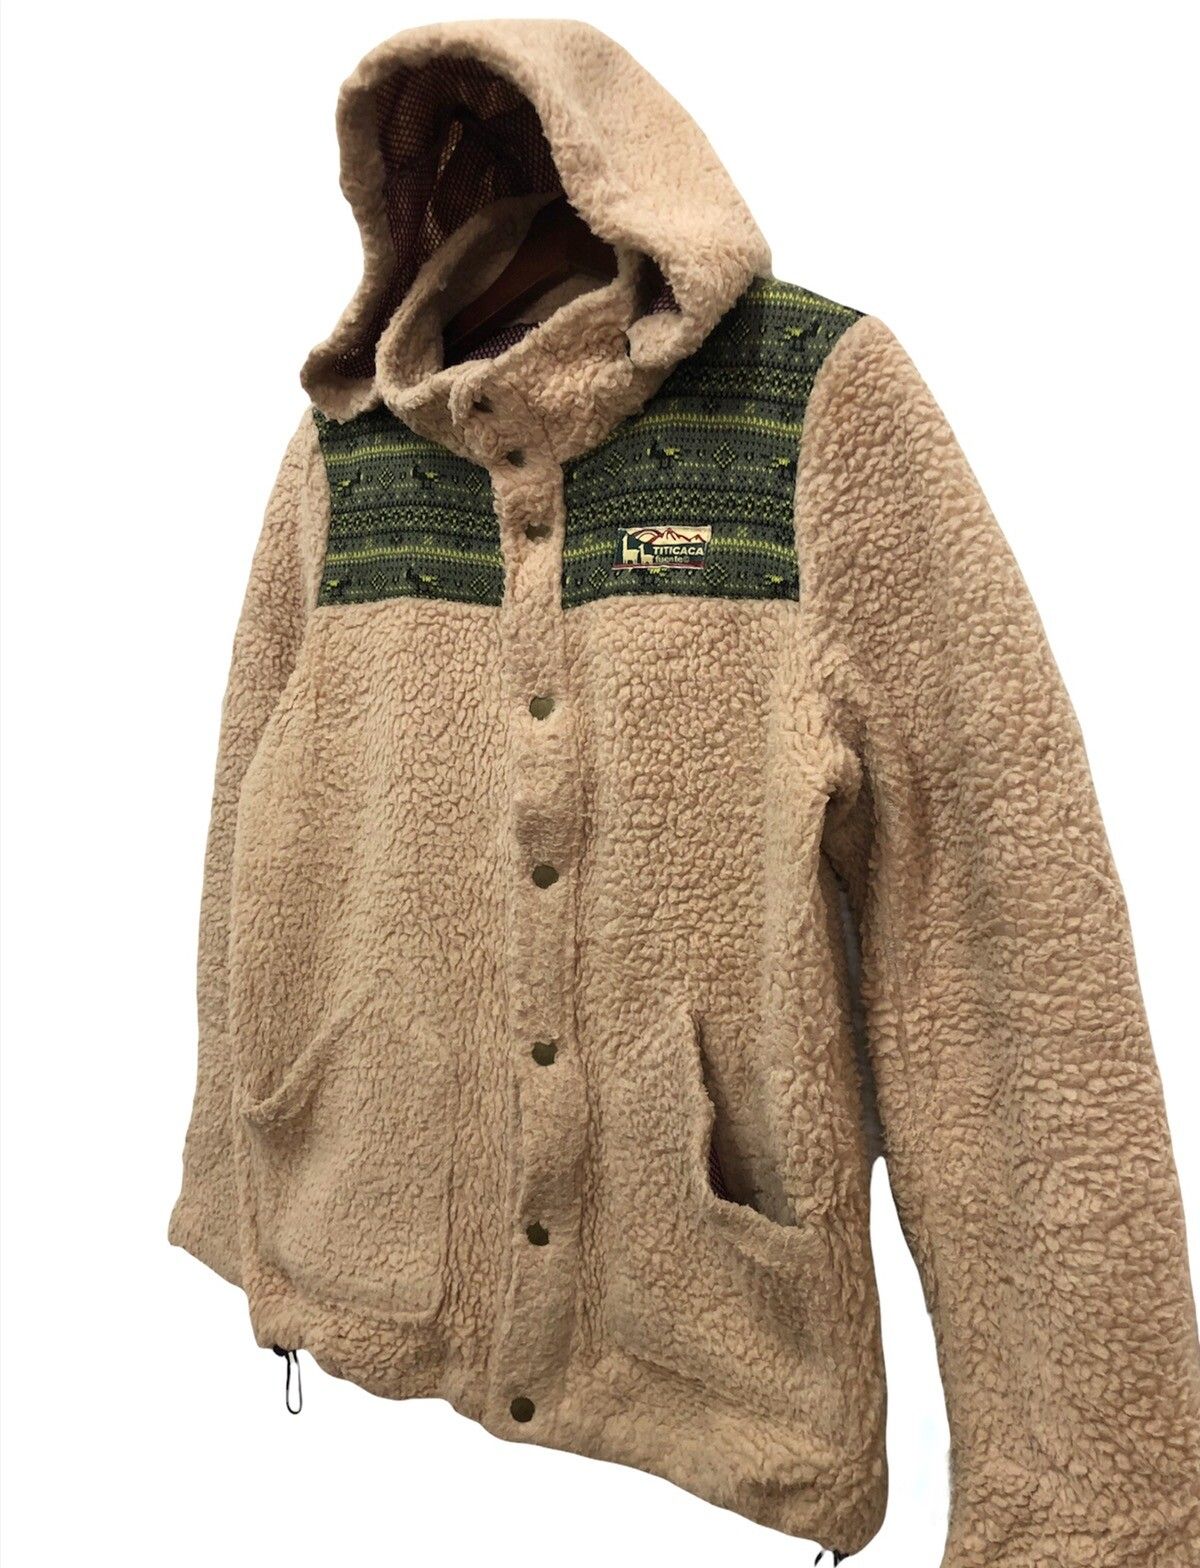 Outdoor Style Go Out! - Titicaca Fluente Fleece Hoodie Jacket - 4